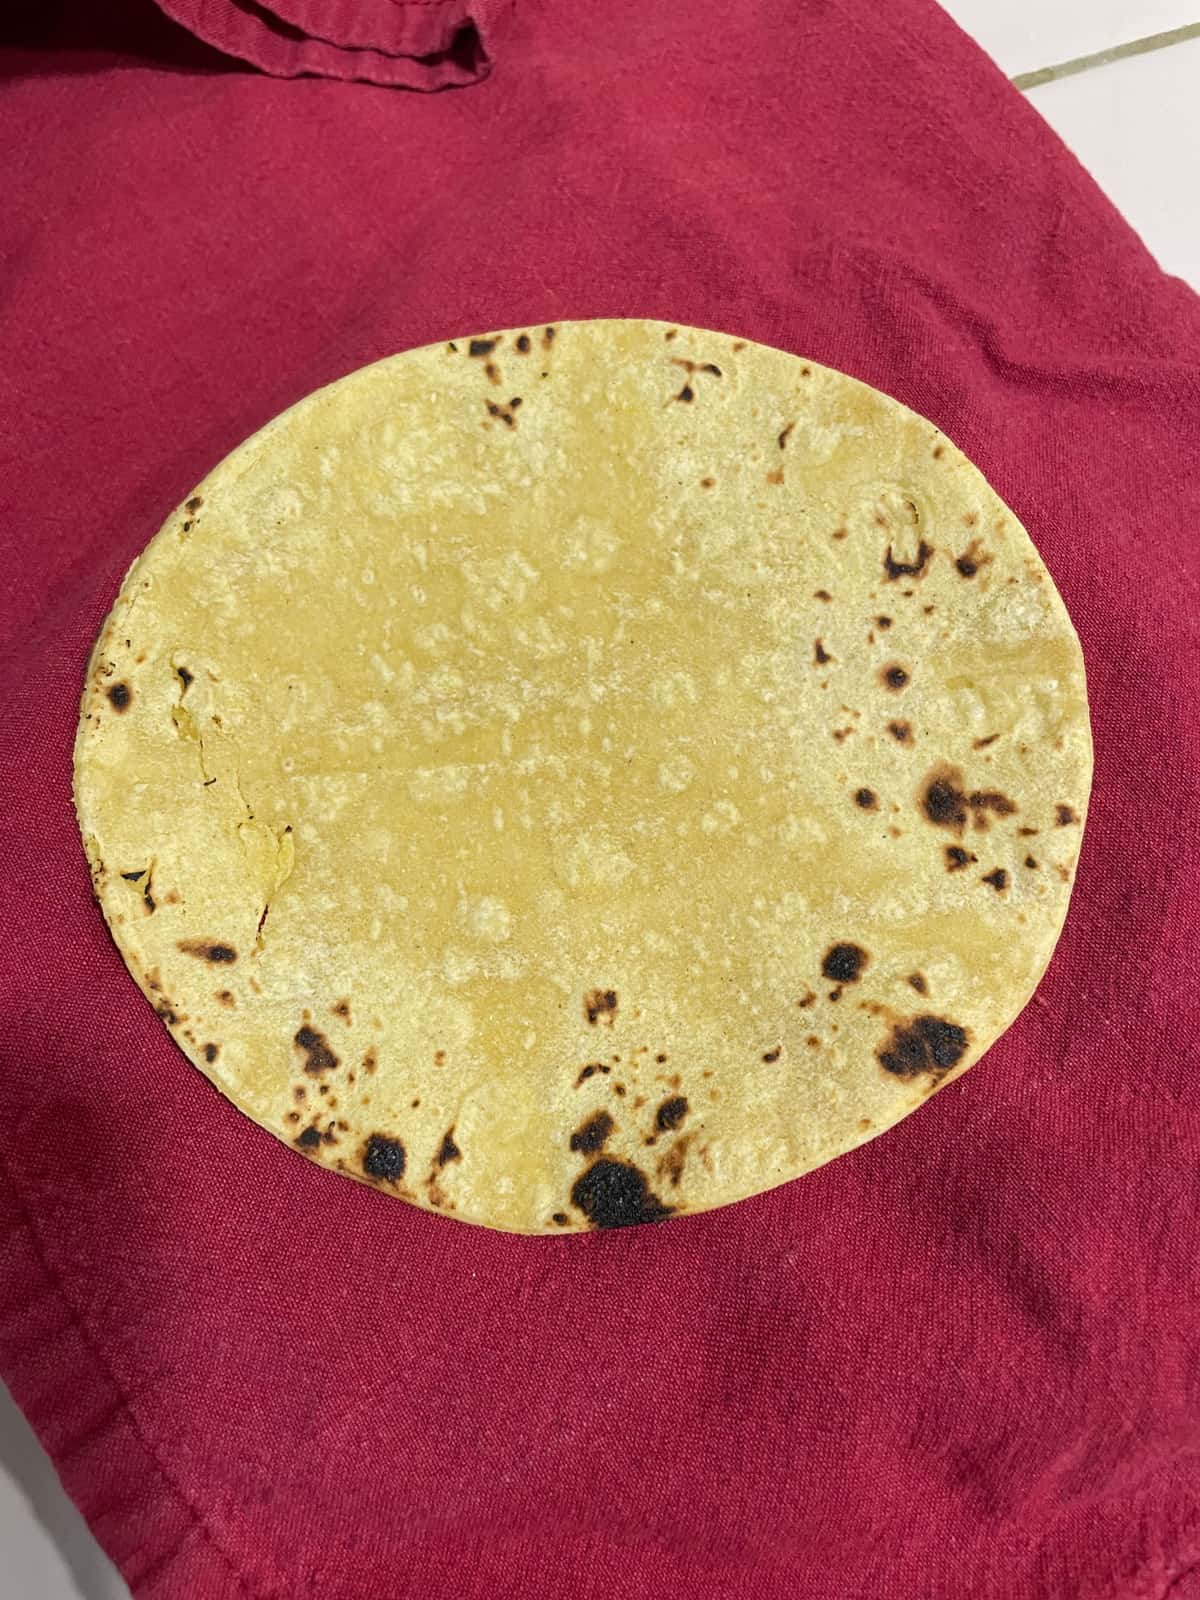 keeping corn tortillas warm in cloth napkin on plate